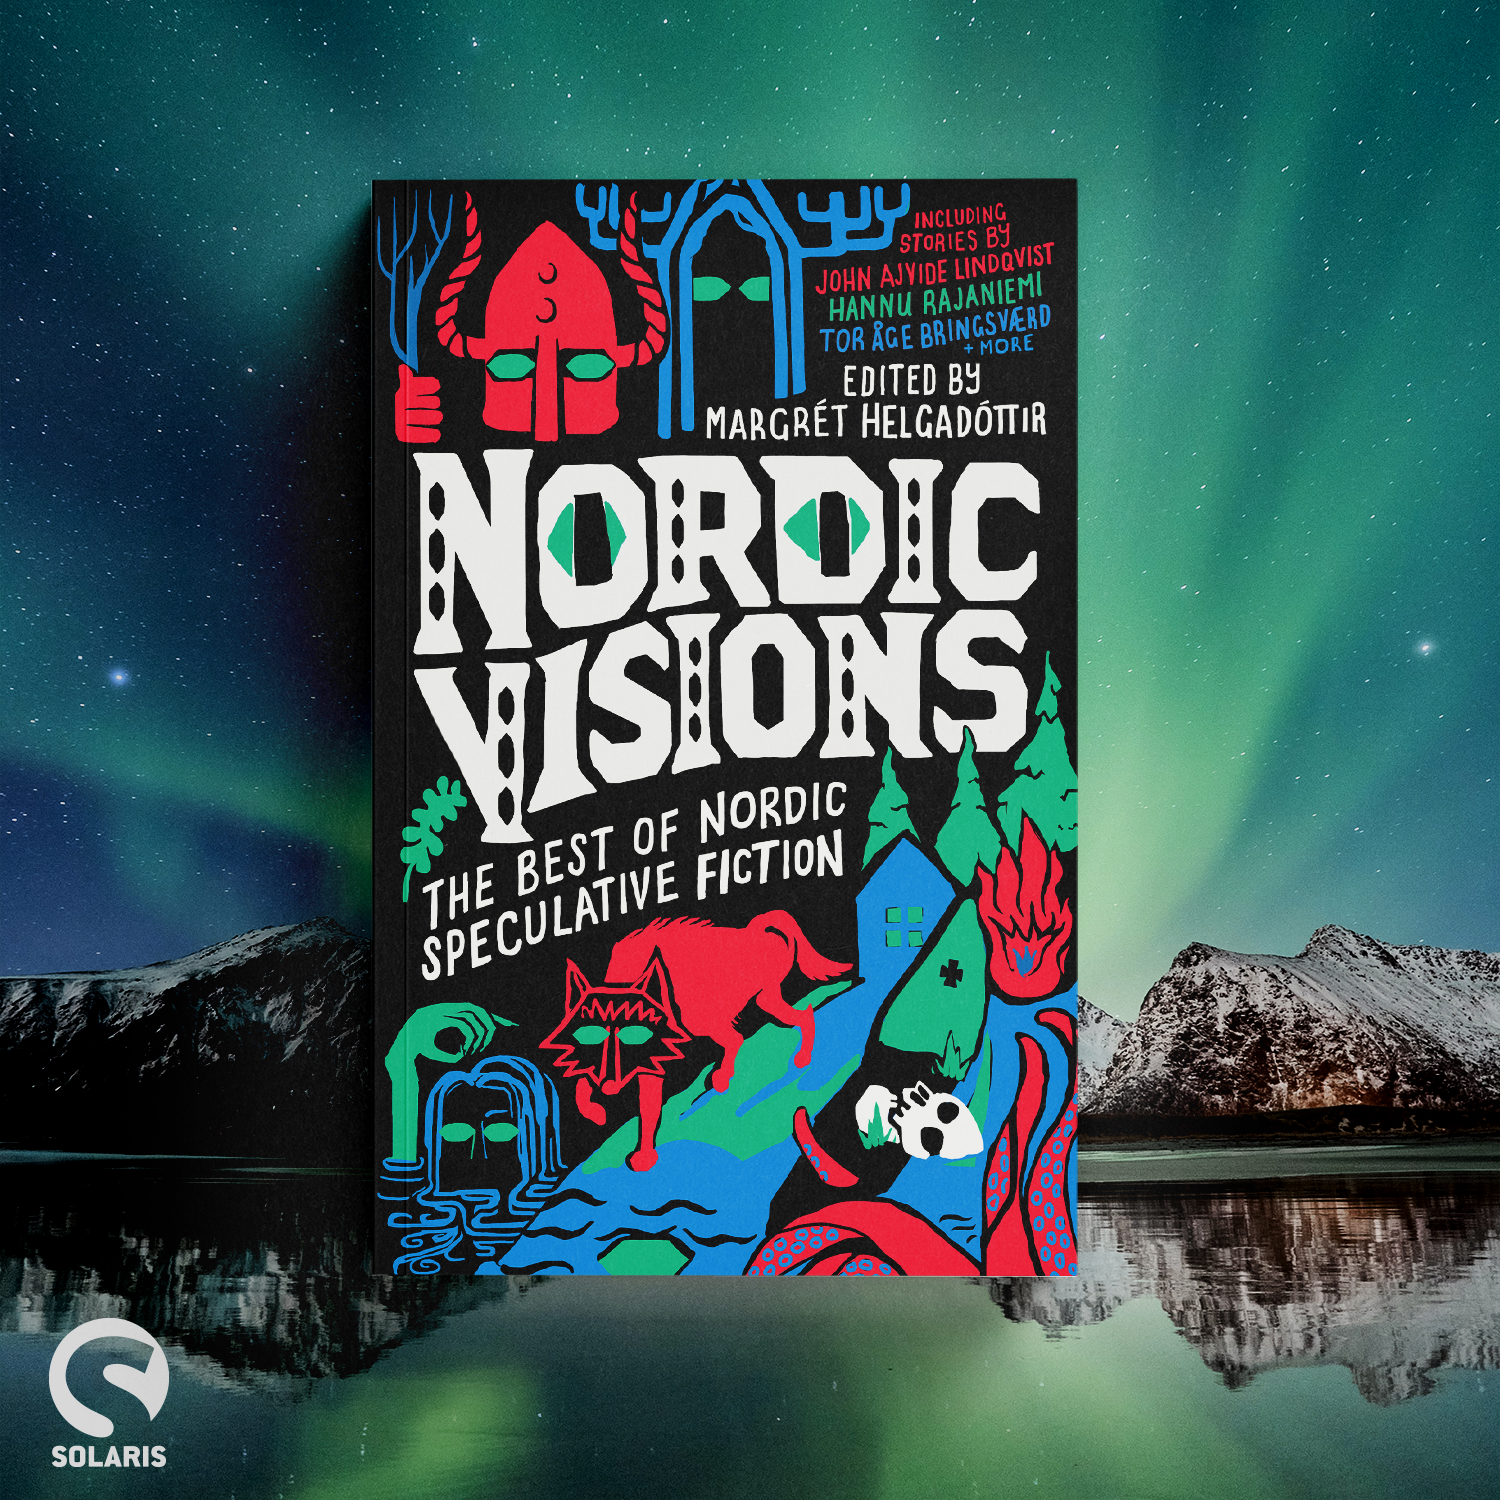 Nordic Game Awards 2020 winners - Nordic Game Community